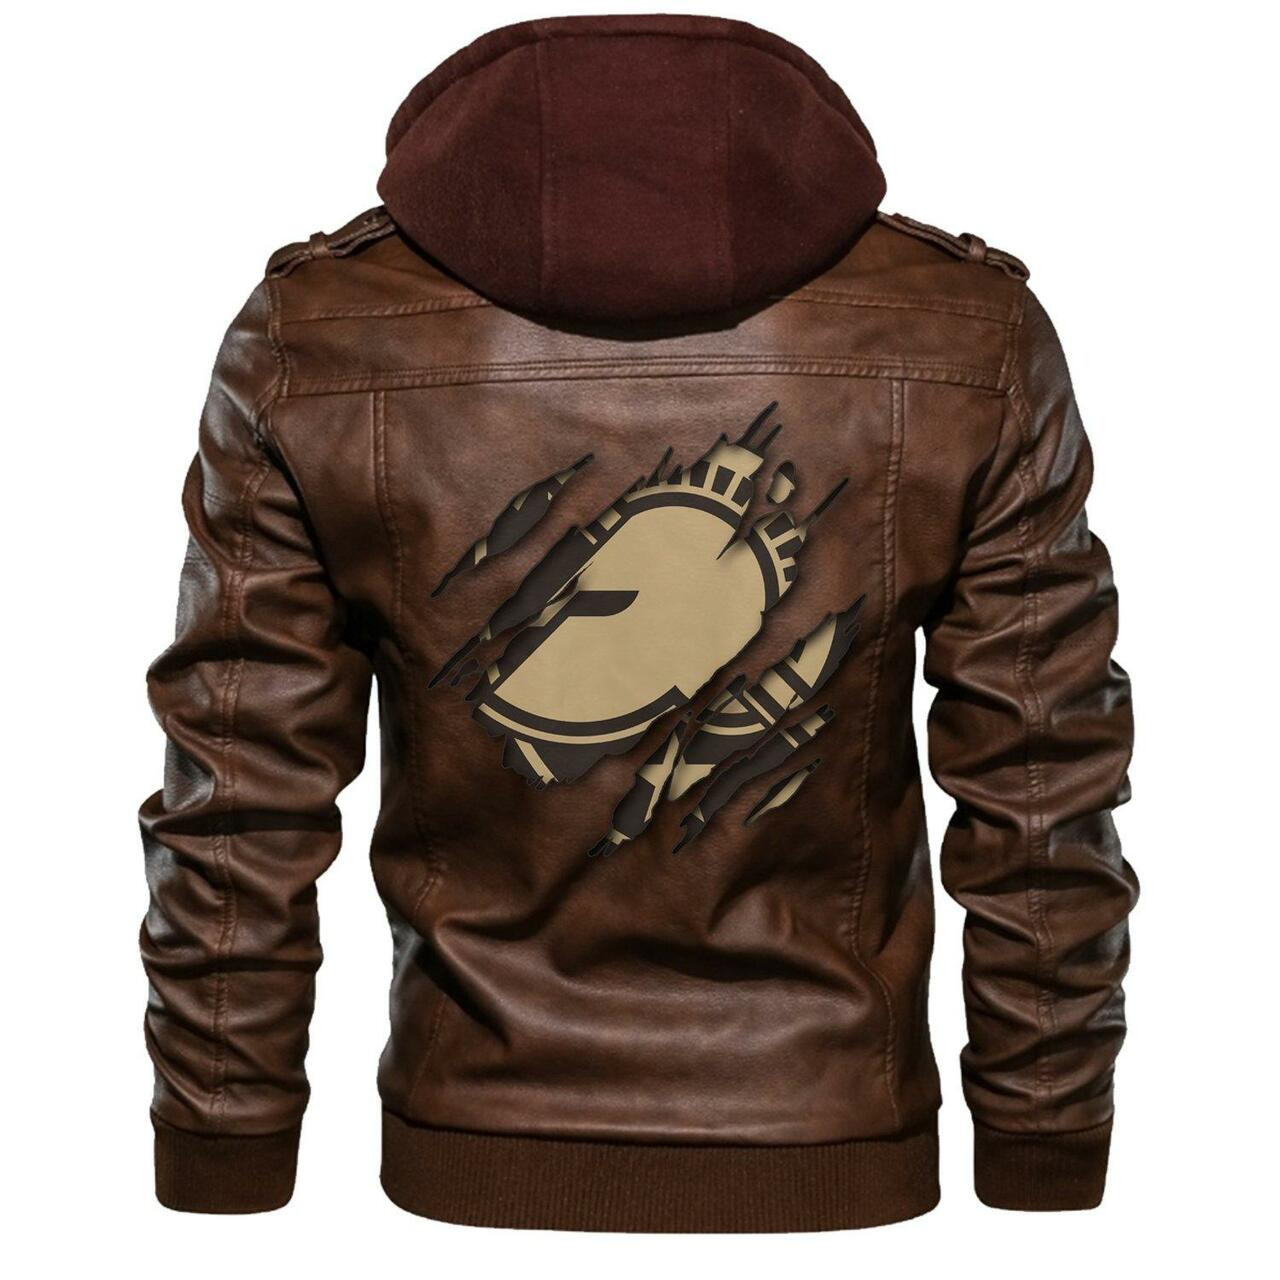 Top leather jacket Sells Best on Techcomshop 126